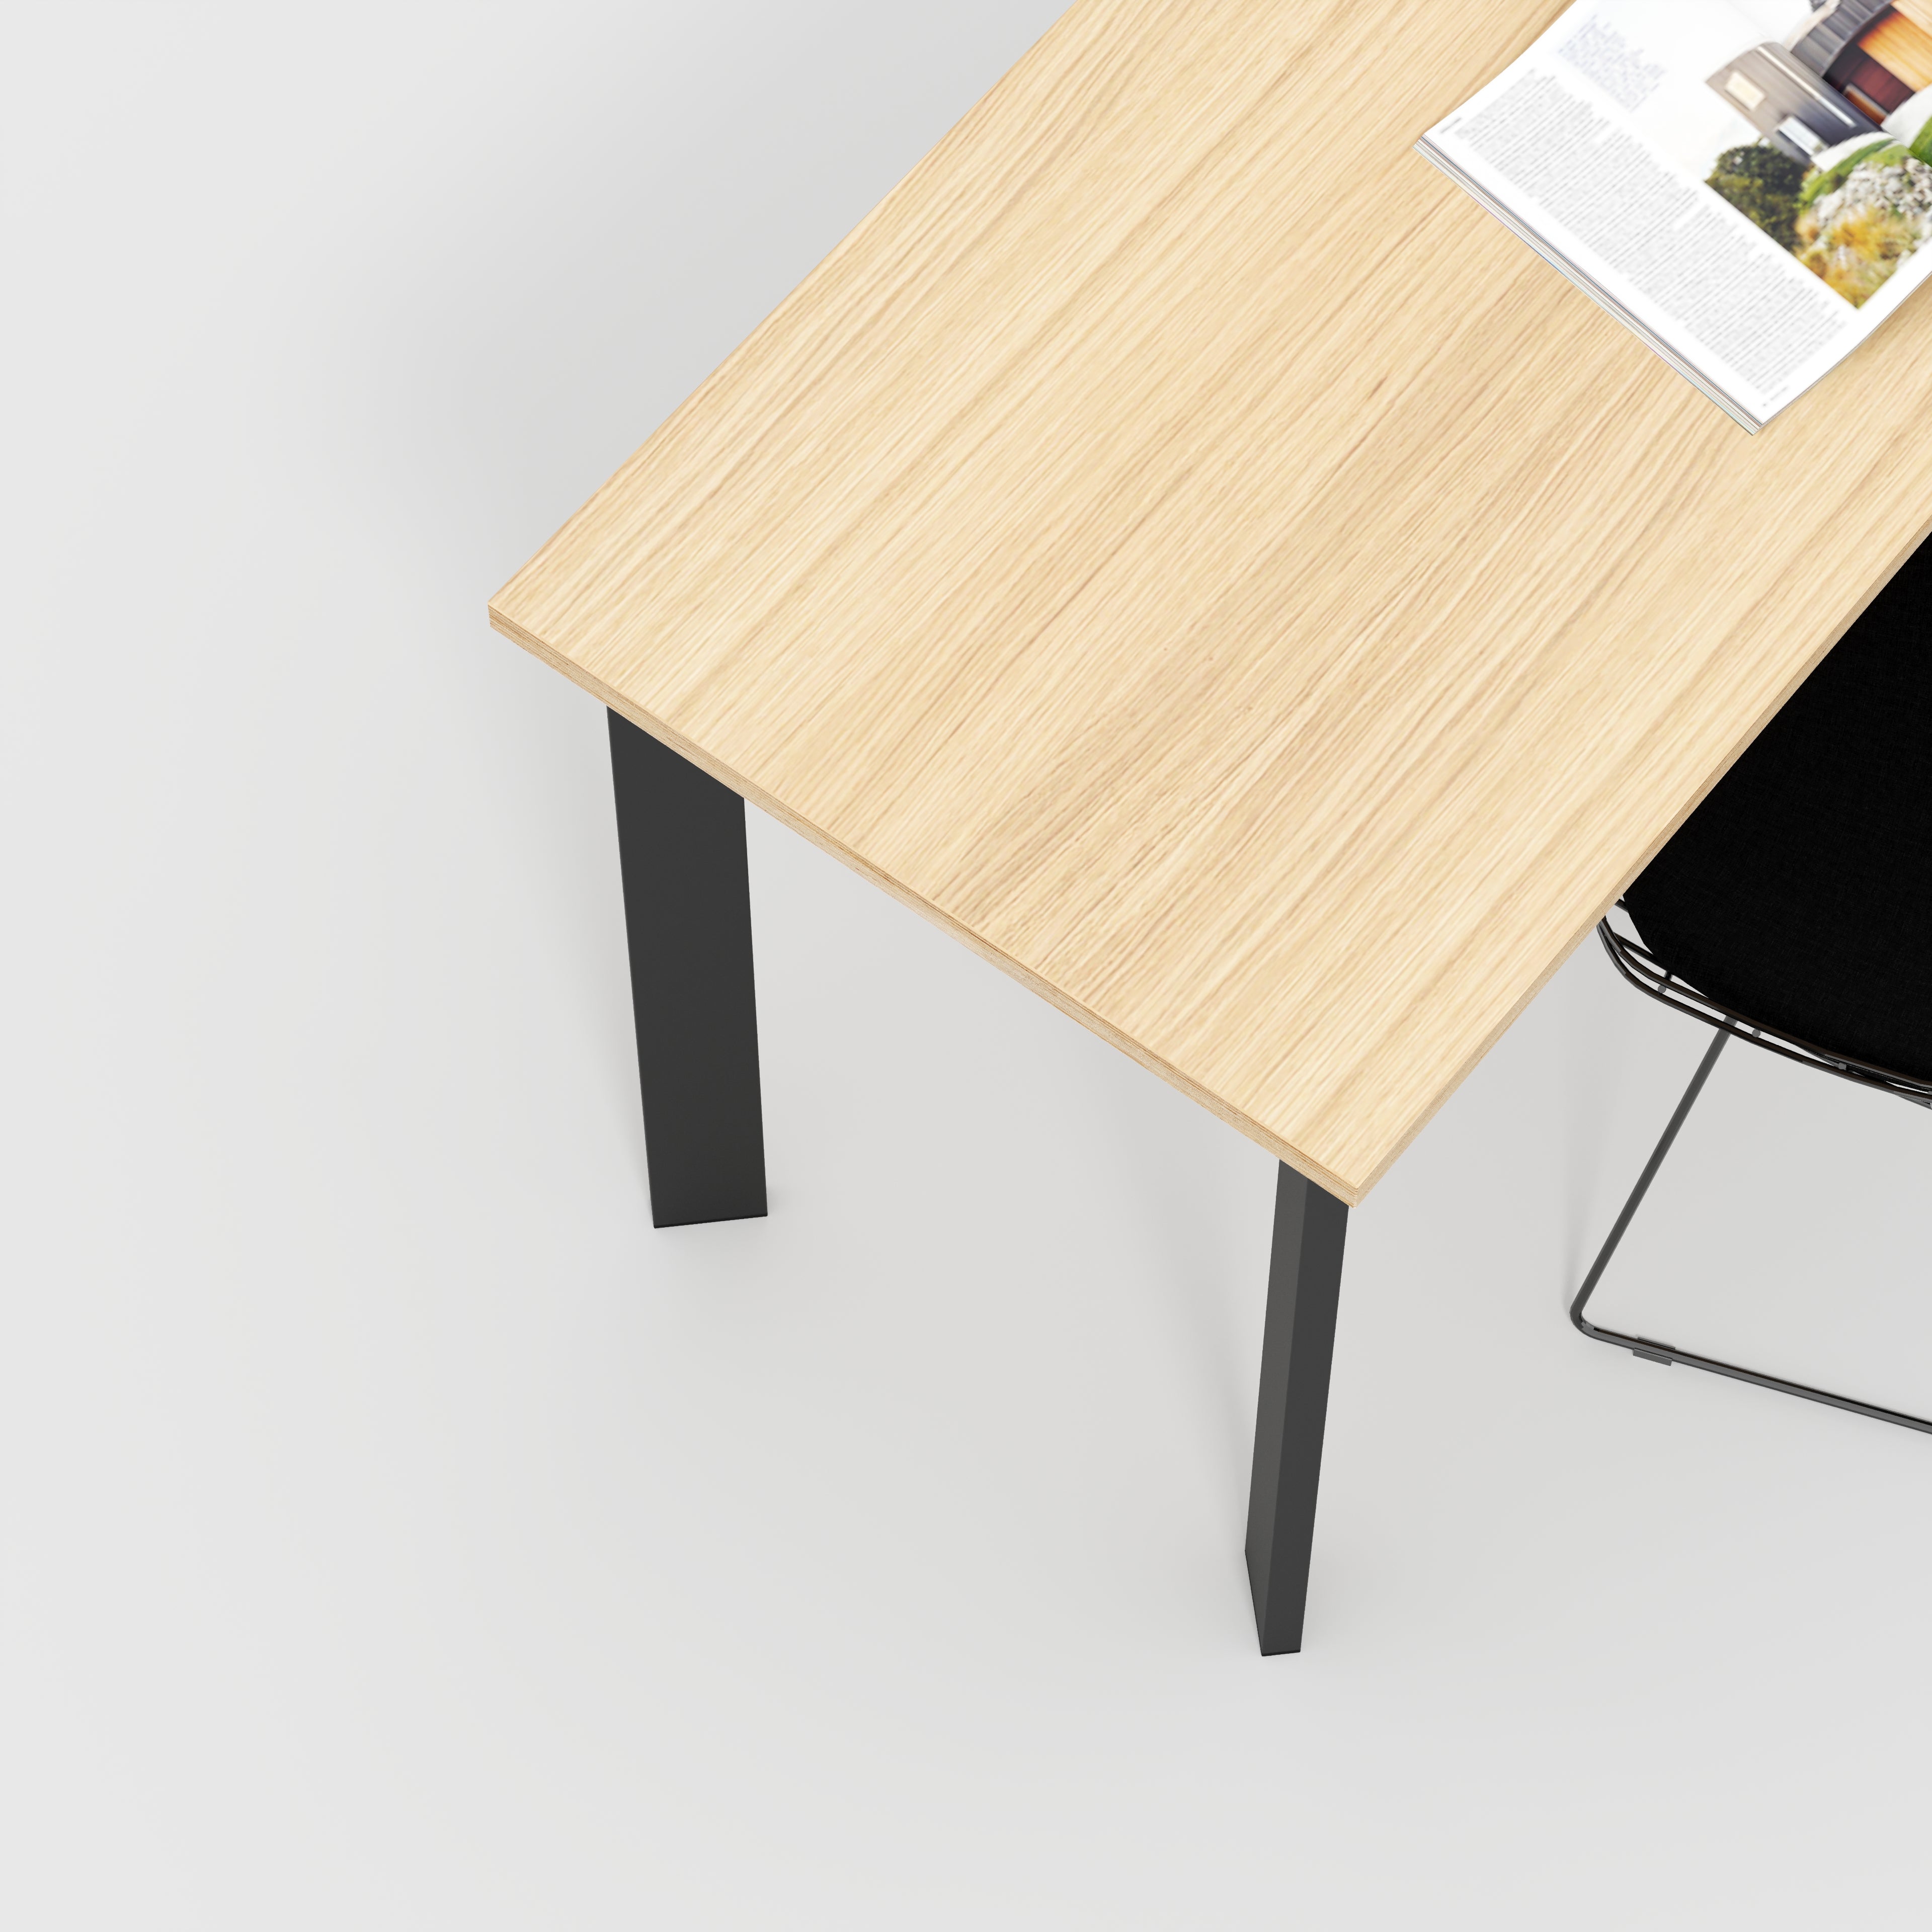 Desk with Black Rectangular Single Pin Legs - Plywood Oak - 1200(w) x 600(d) x 735(h)